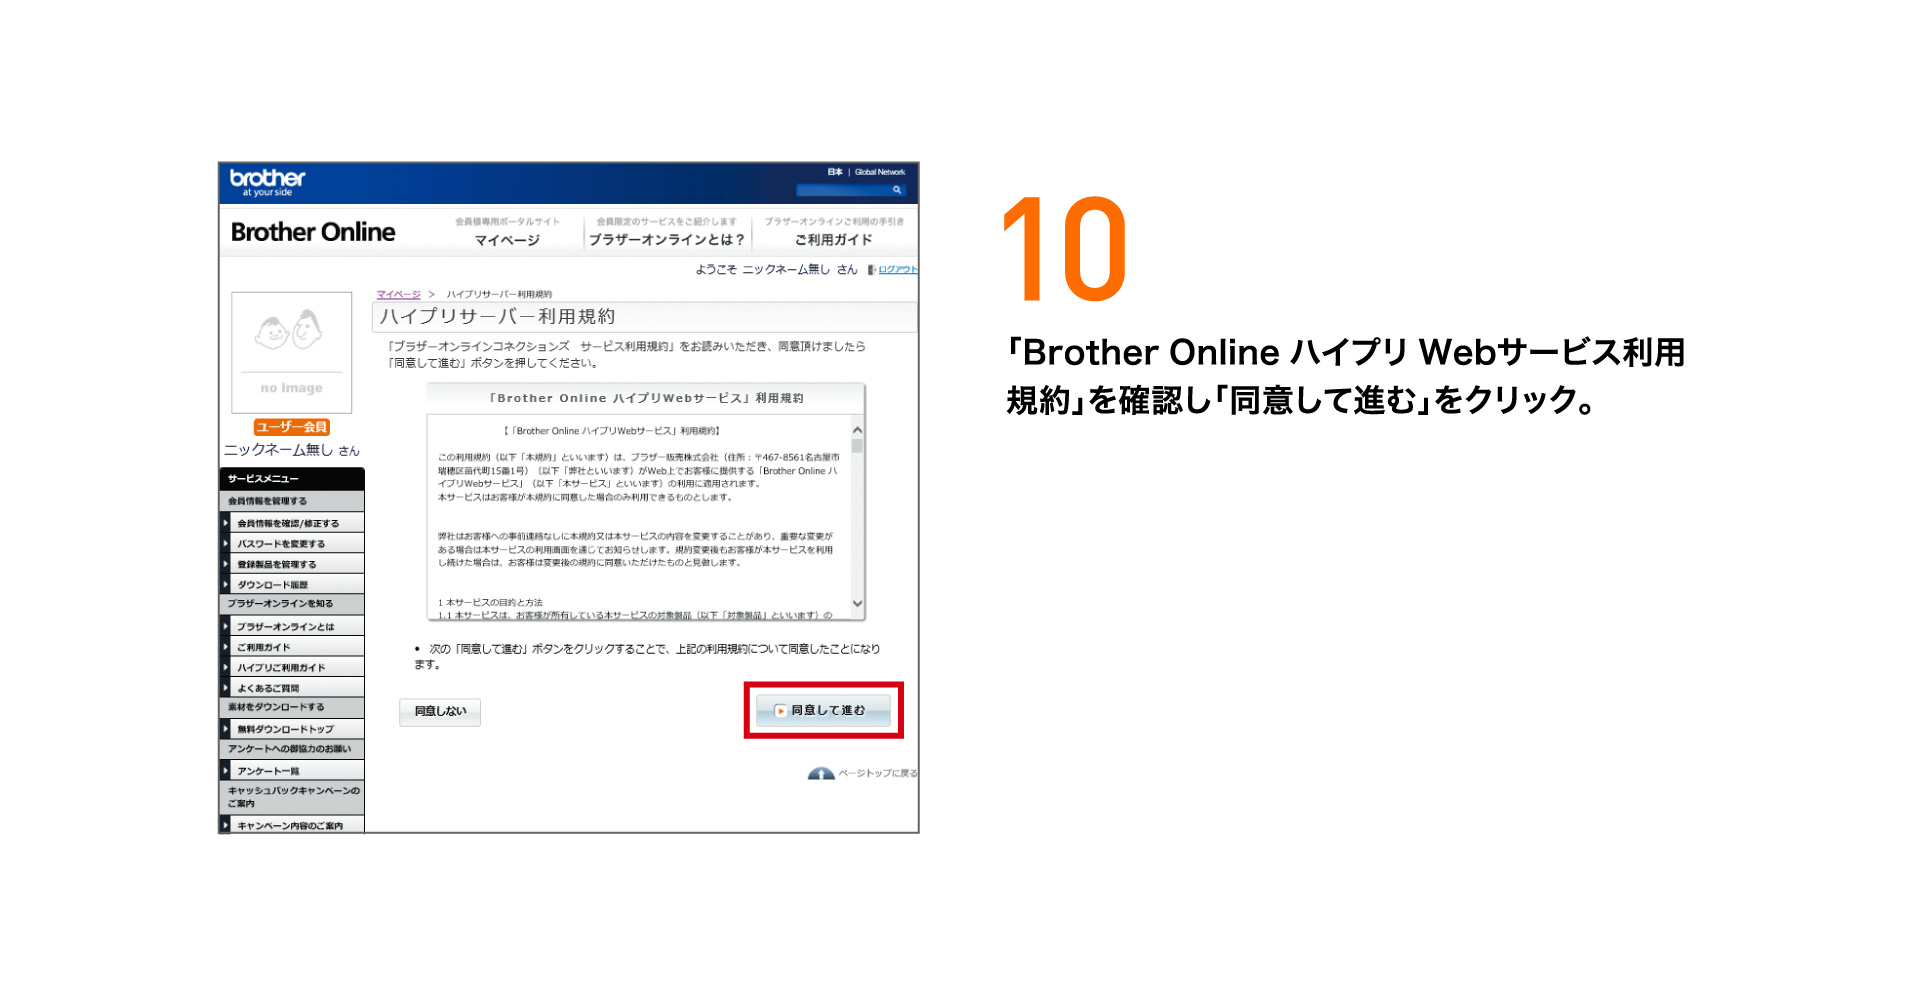 10 「Brother Online ハイプリ Webサービス利用規約」を確認し「同意して進む」をクリック。